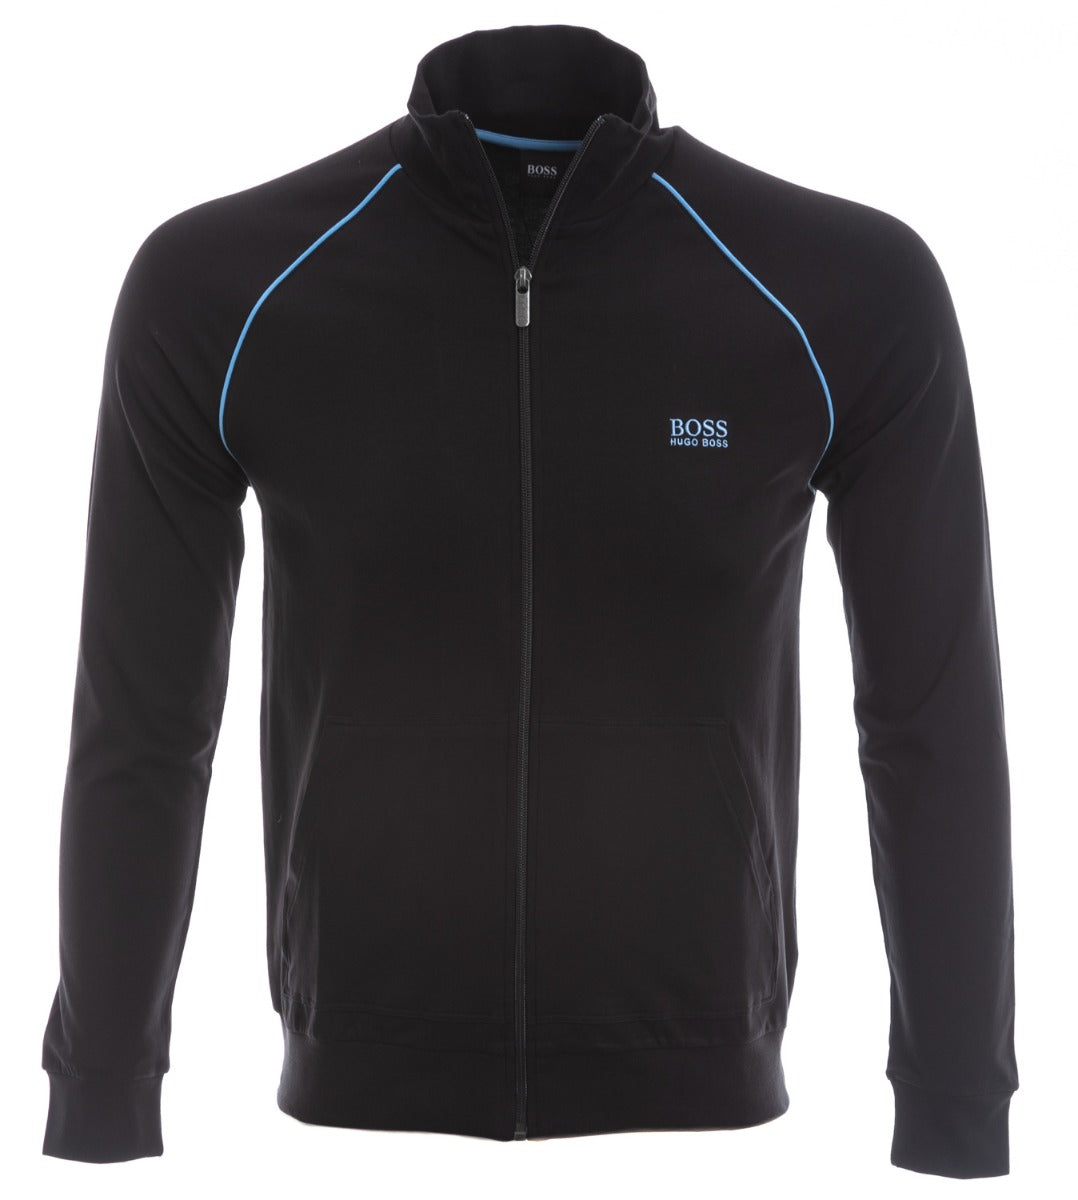 BOSS Mix & Match Jacket Z Sweatshirt in Black & Sky Blue Trim